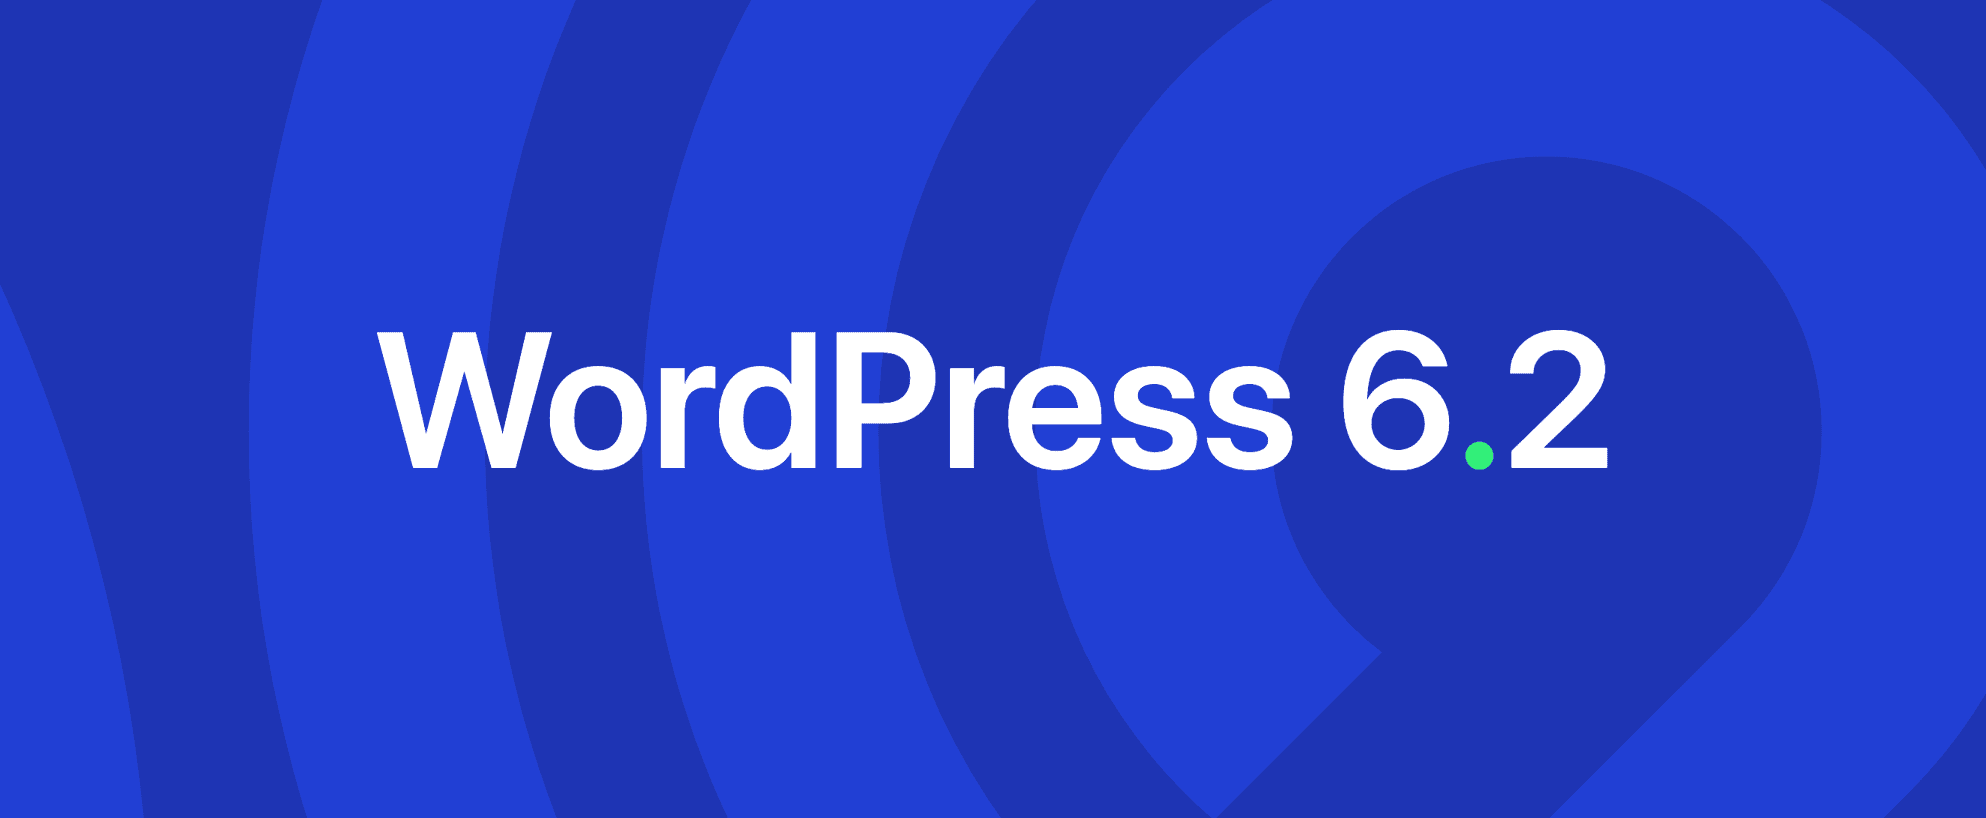 wordpress 6.2